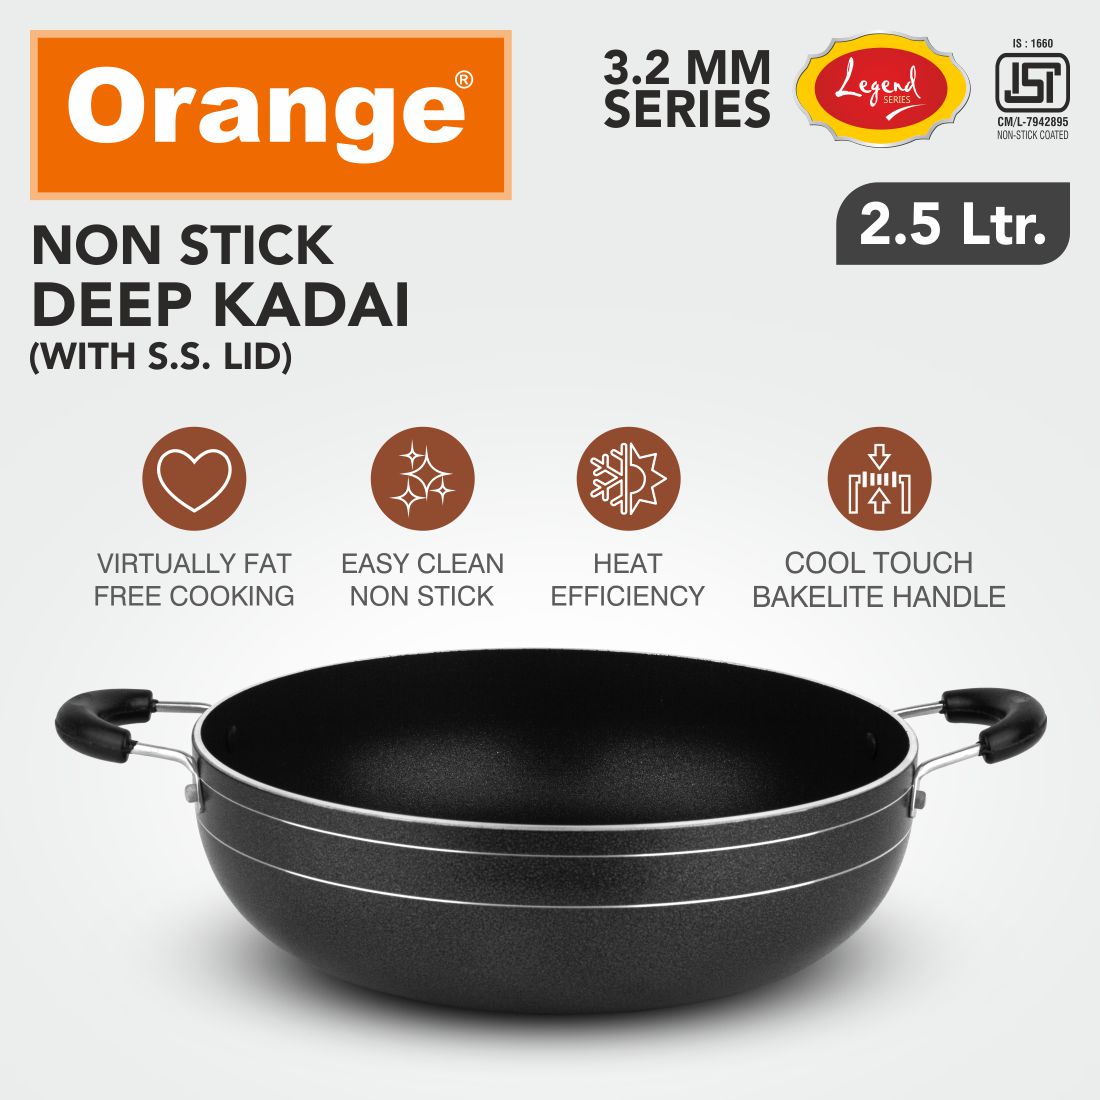 Orange 3.2MM Series Non-Stick Deep Kadai/Sabzi Kadai/Halwa/Fired Rice/Kadi With Glass Lid | Heavy Thickness | Cool Touch Backlit Handles